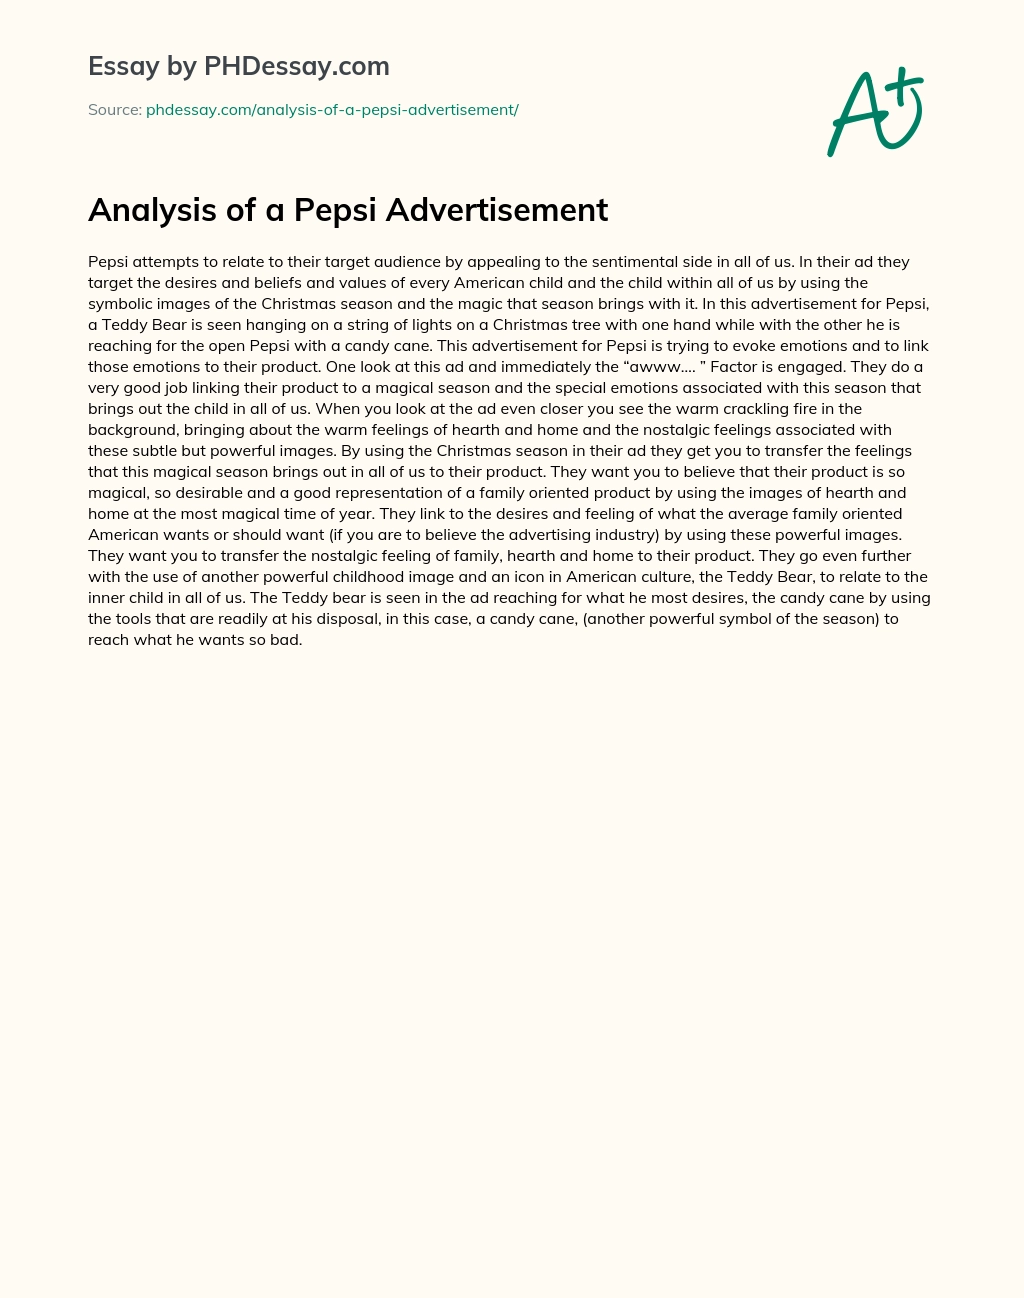 Analysis of a Pepsi Advertisement essay